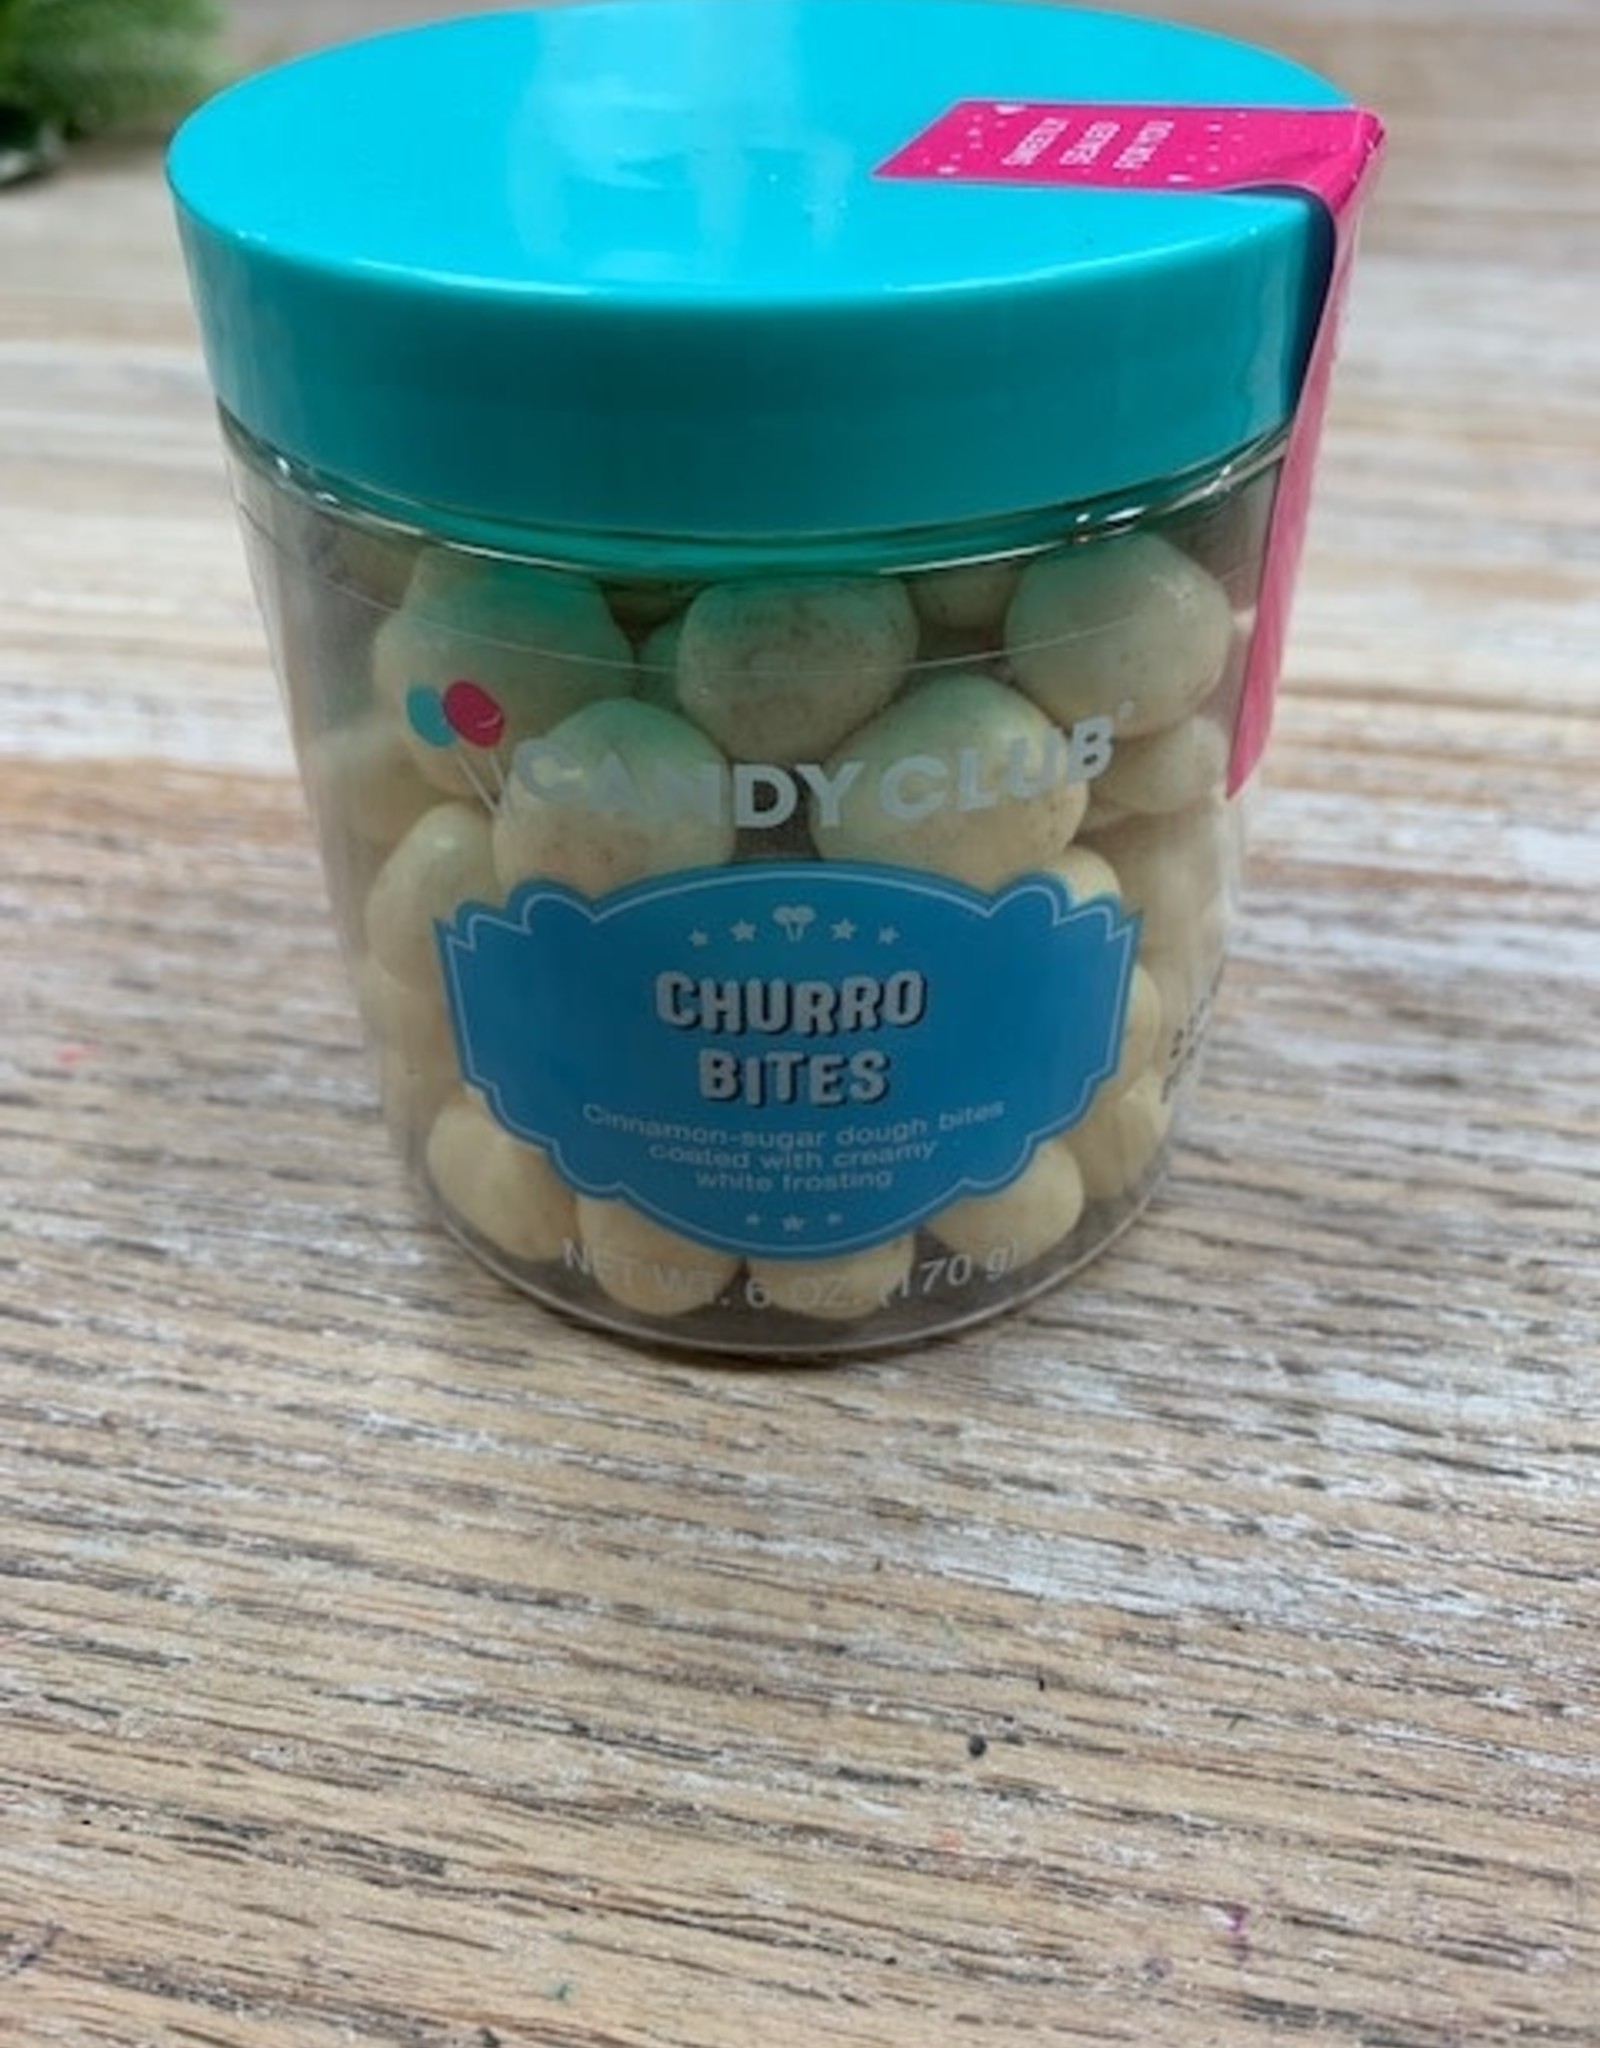 Candy Churro bites